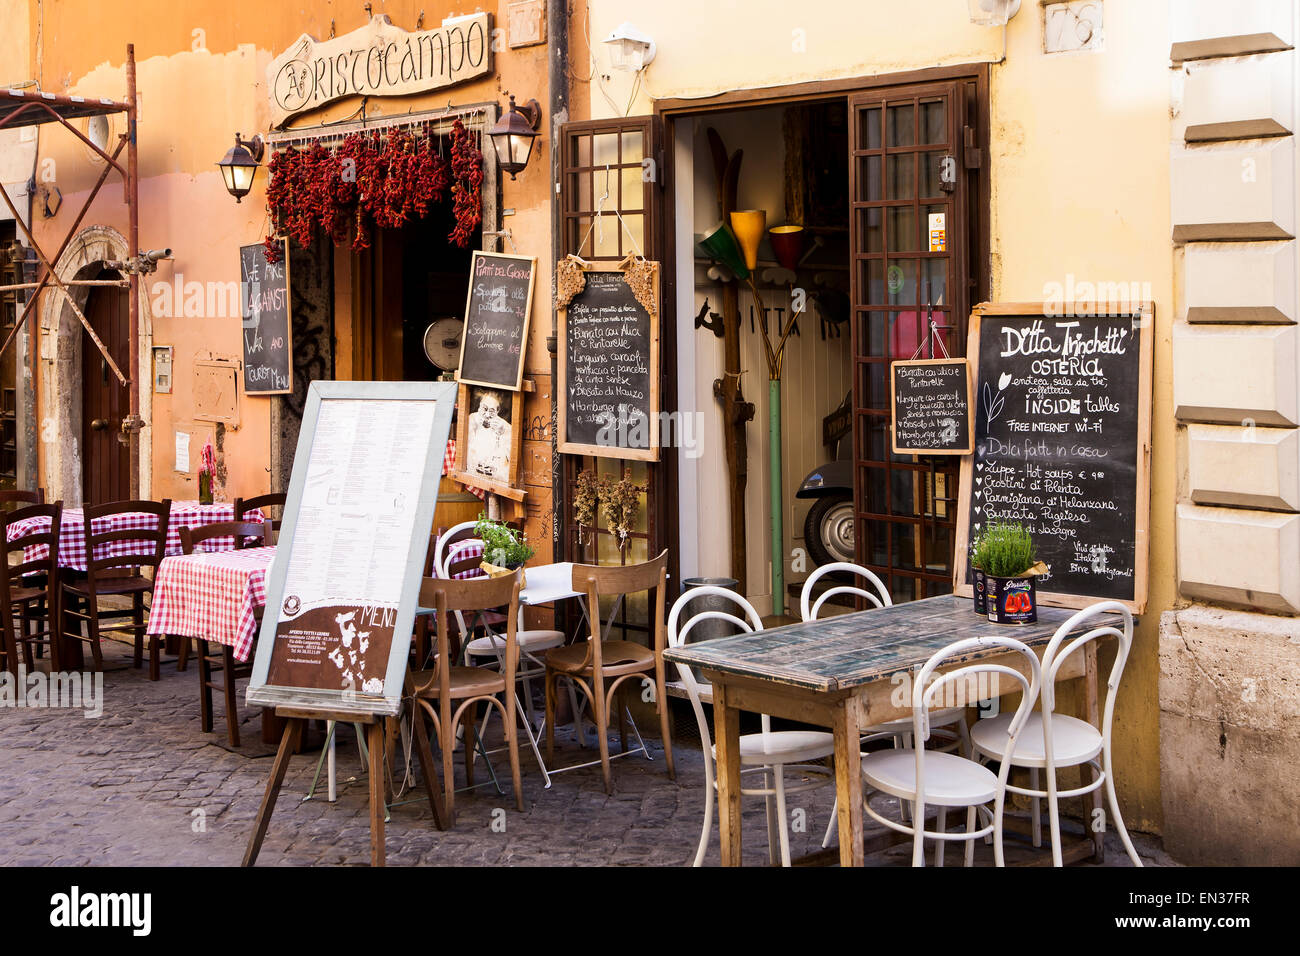 Restaurant italien typique, Trastevere, Rome, Italie Banque D'Images